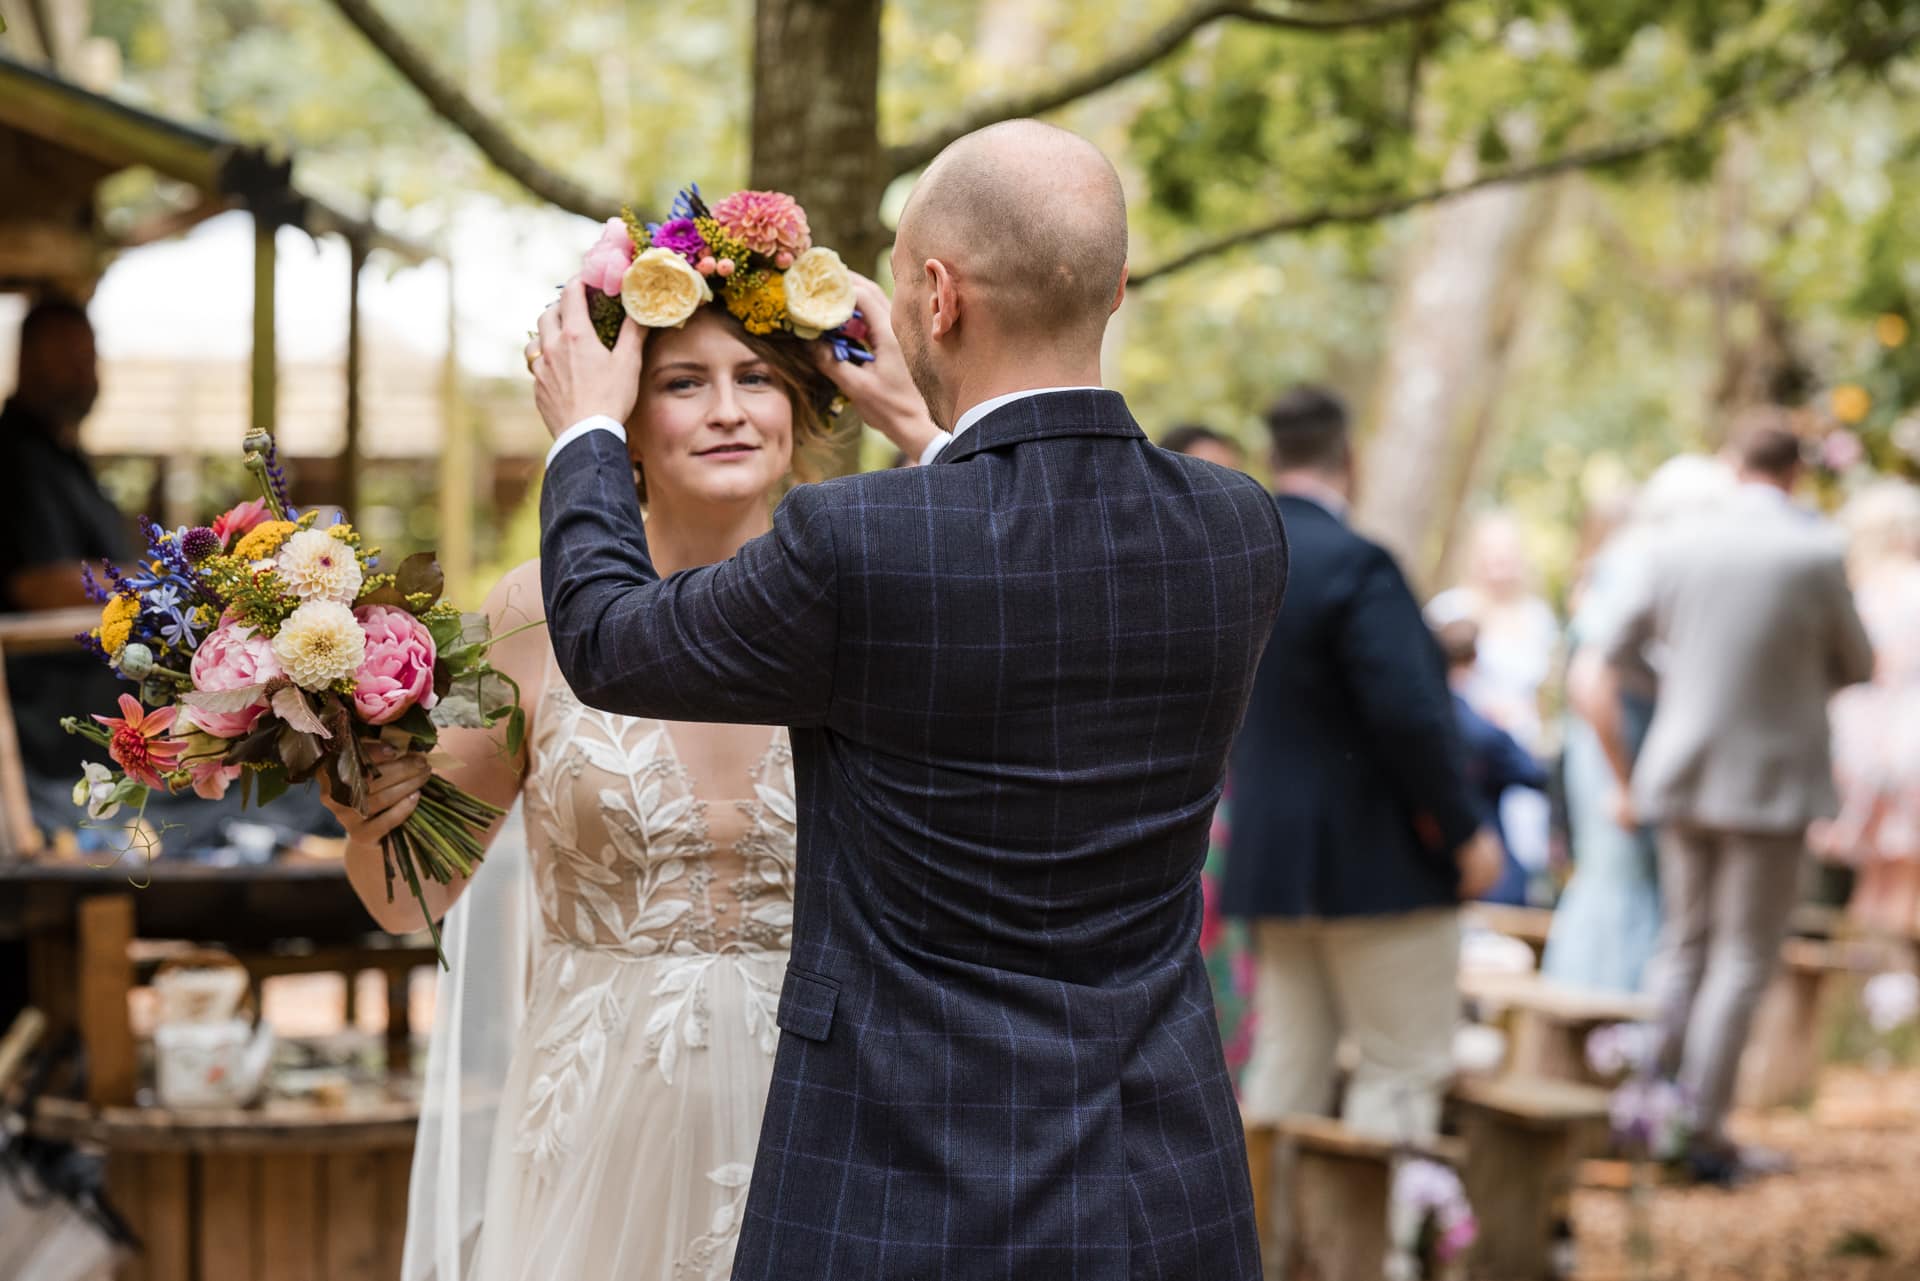 Groom aligning flowers on Brides head.